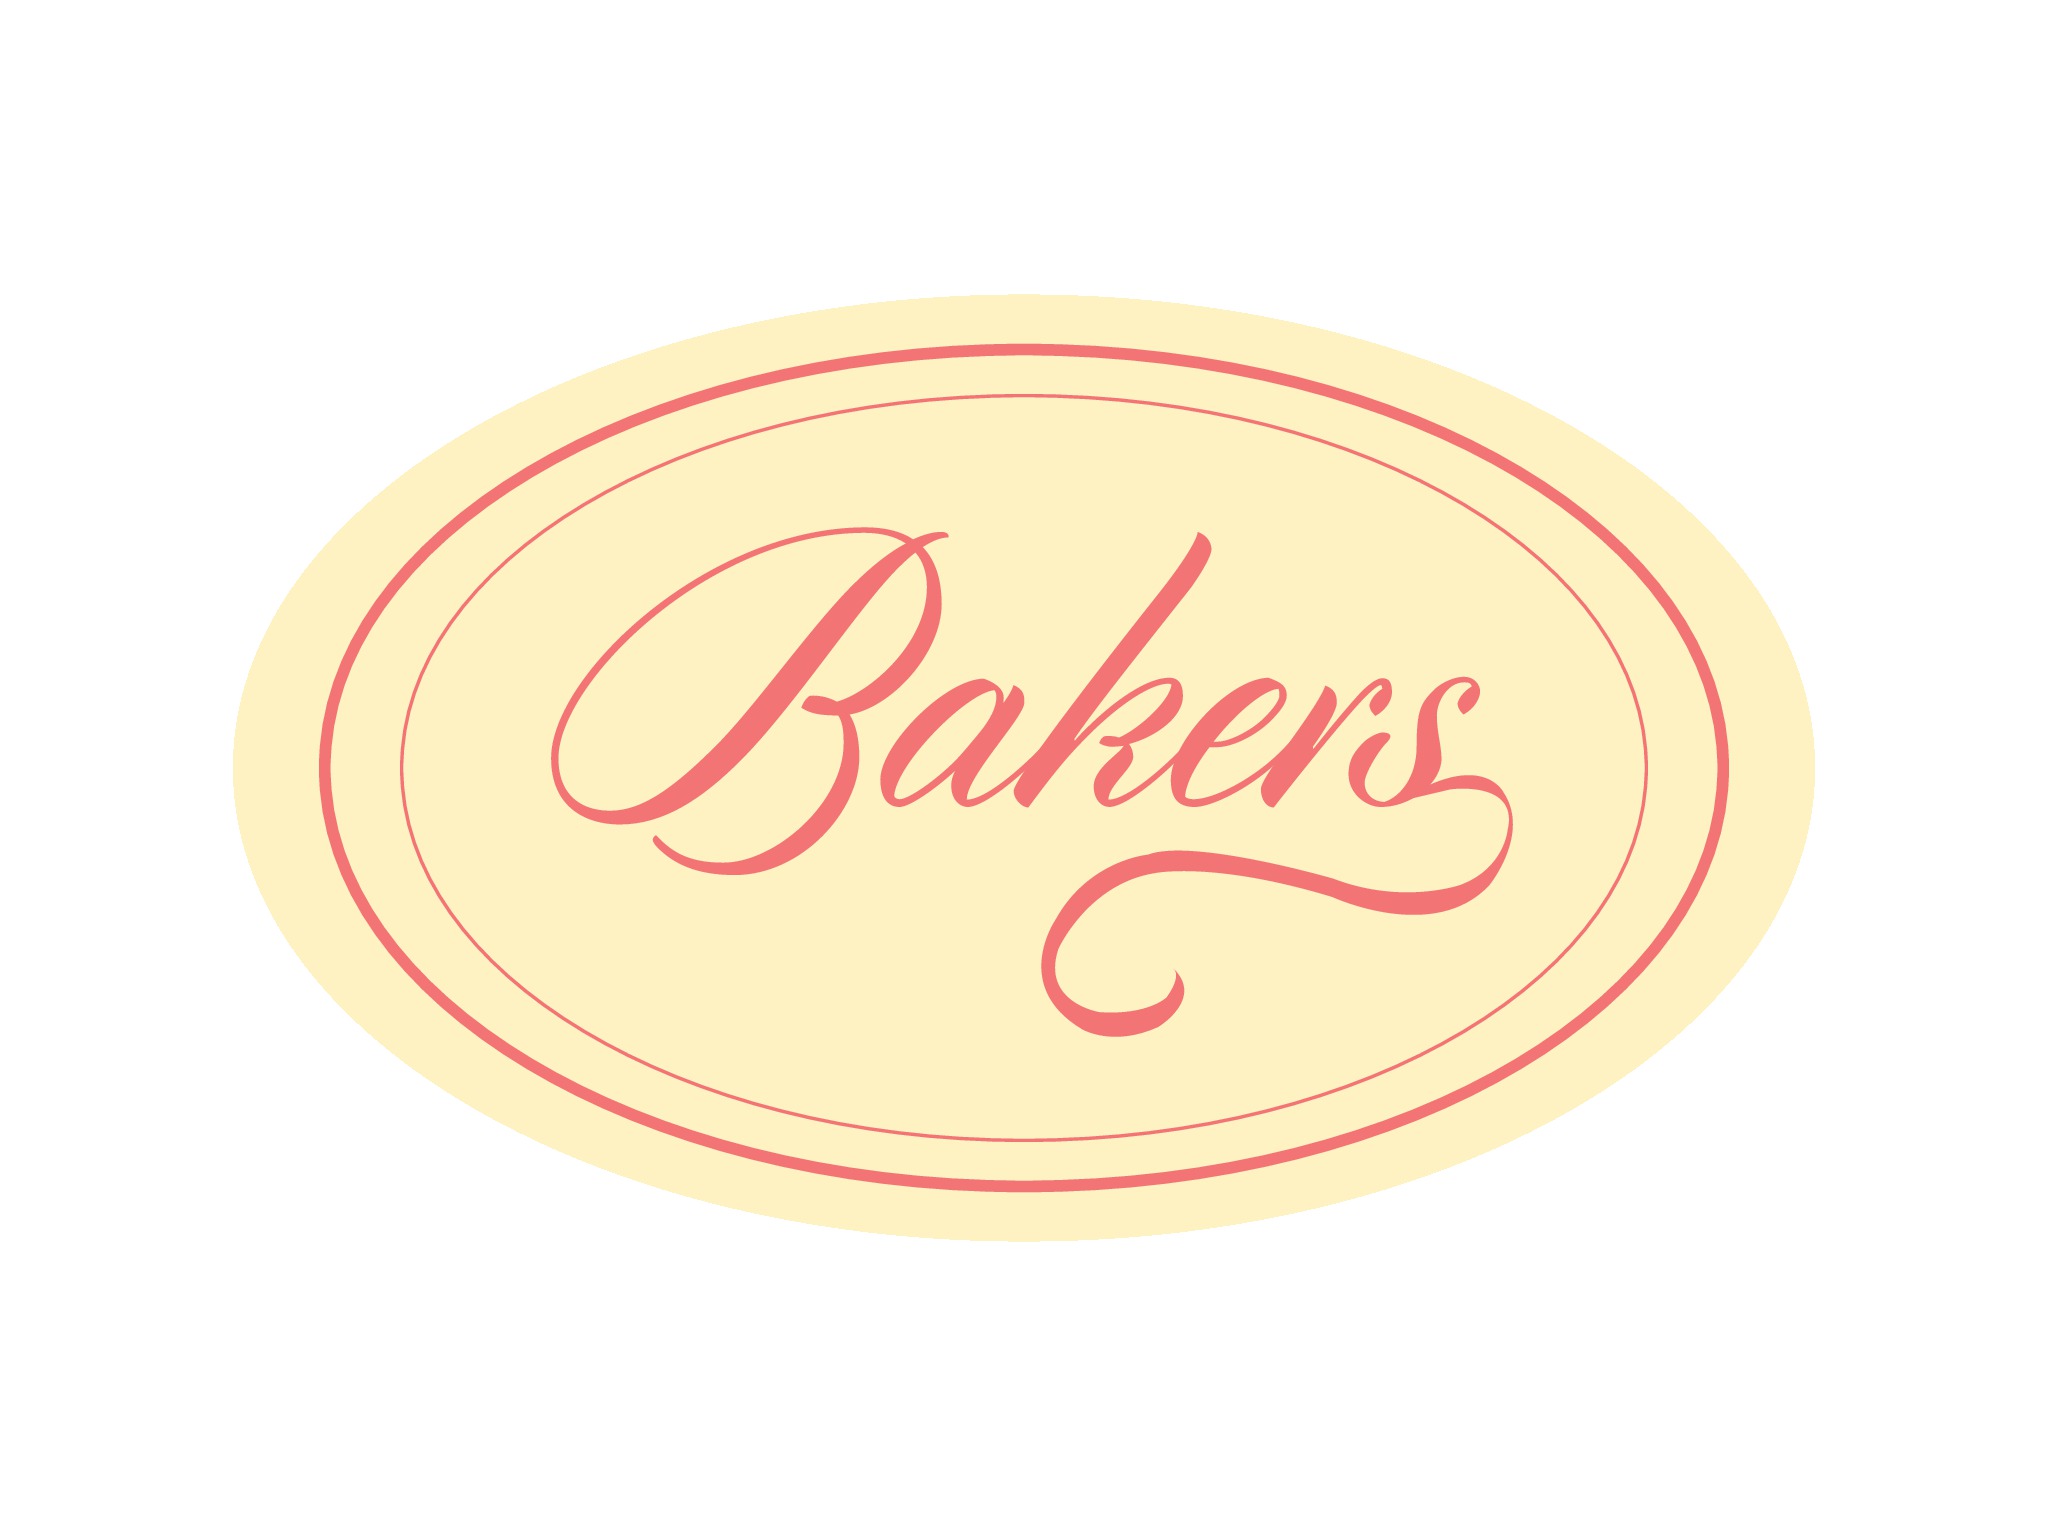 bakers-shoes-by-cristina-piwowarski-sva-design